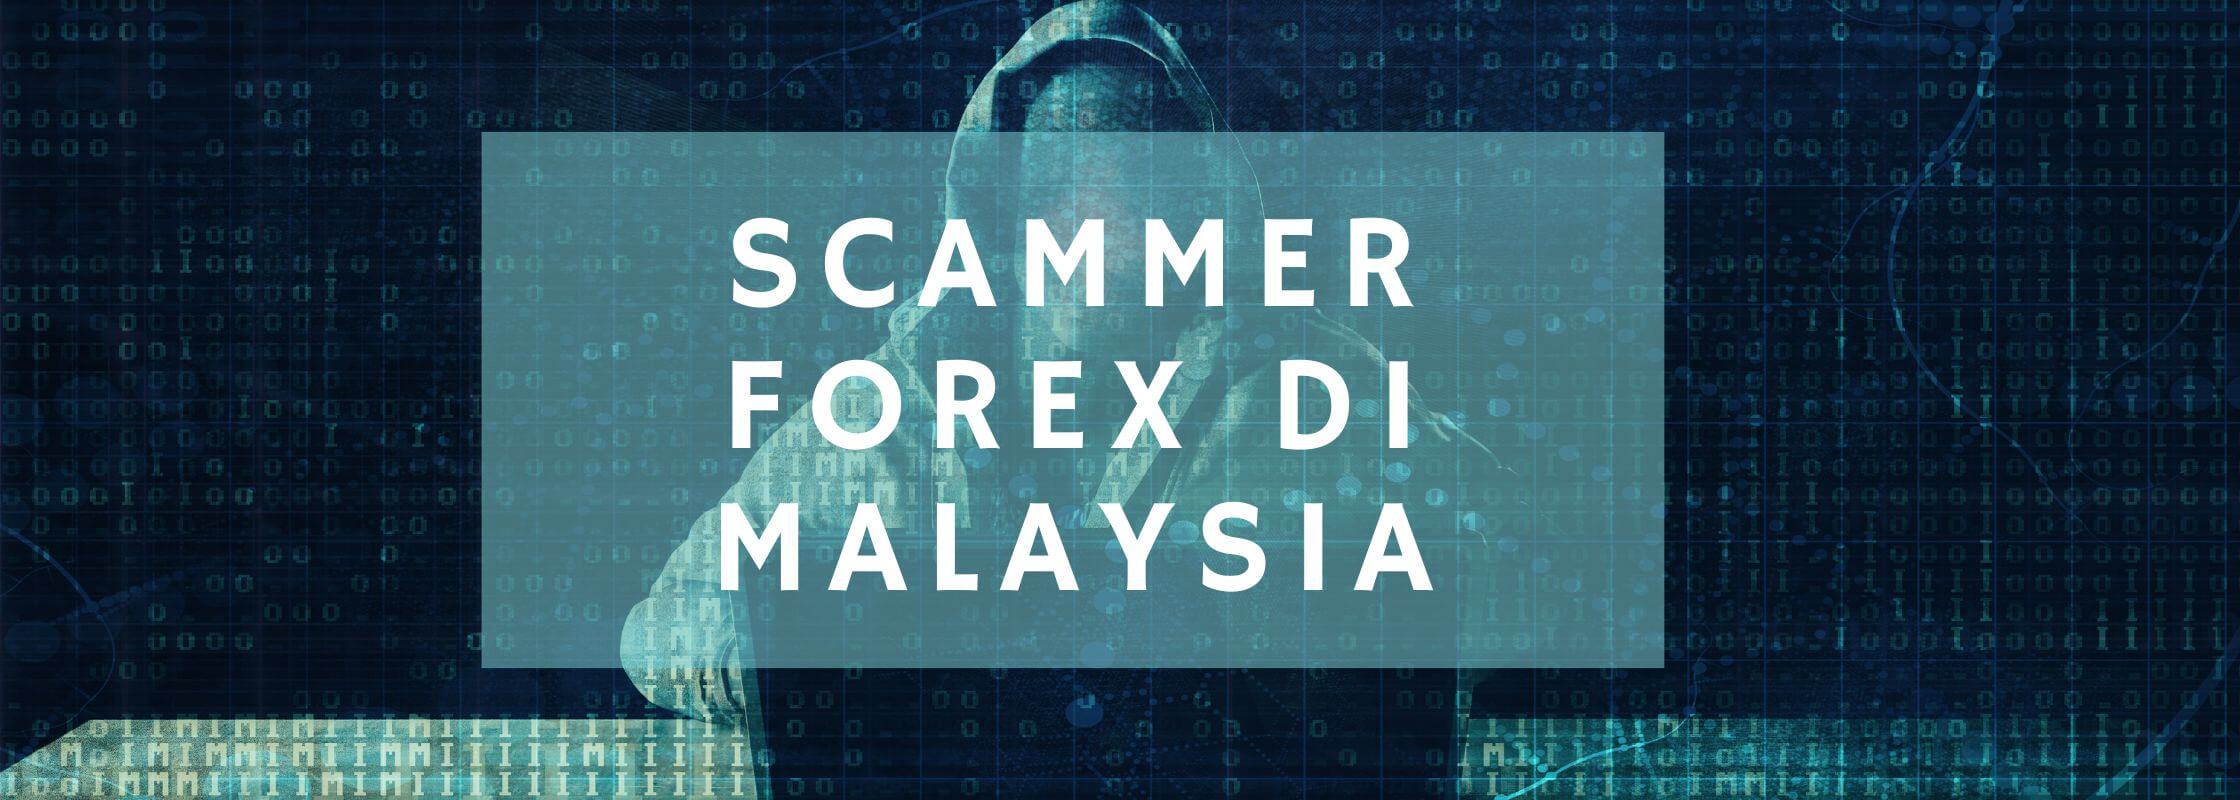 scammer forex di malaysia